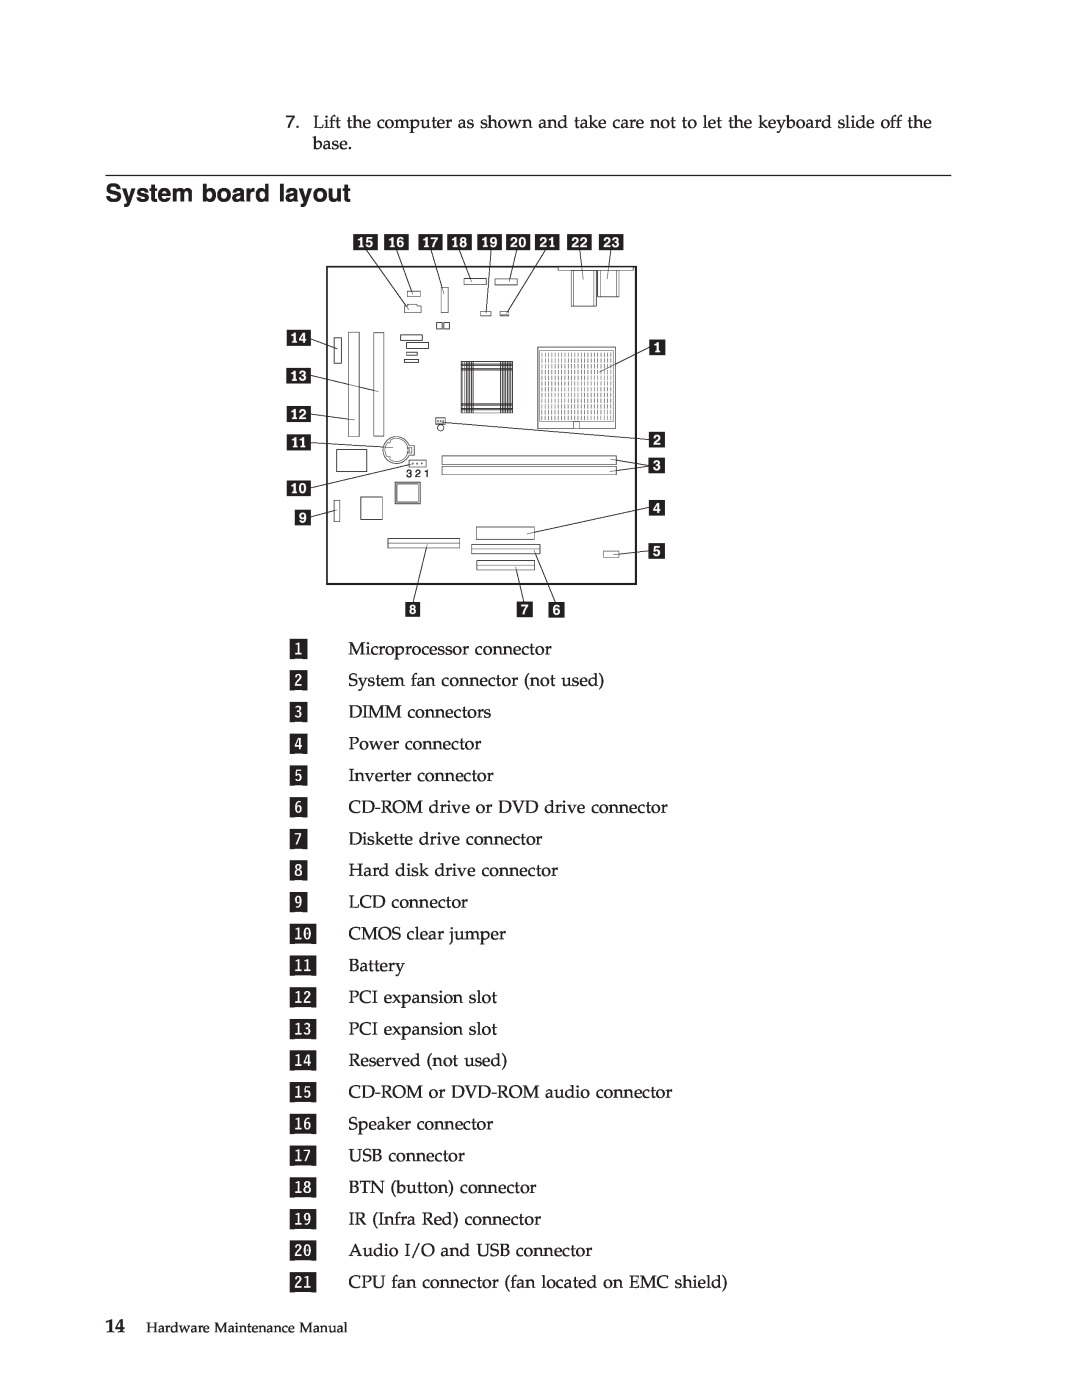 IBM 6643, 2179 manual System board layout 